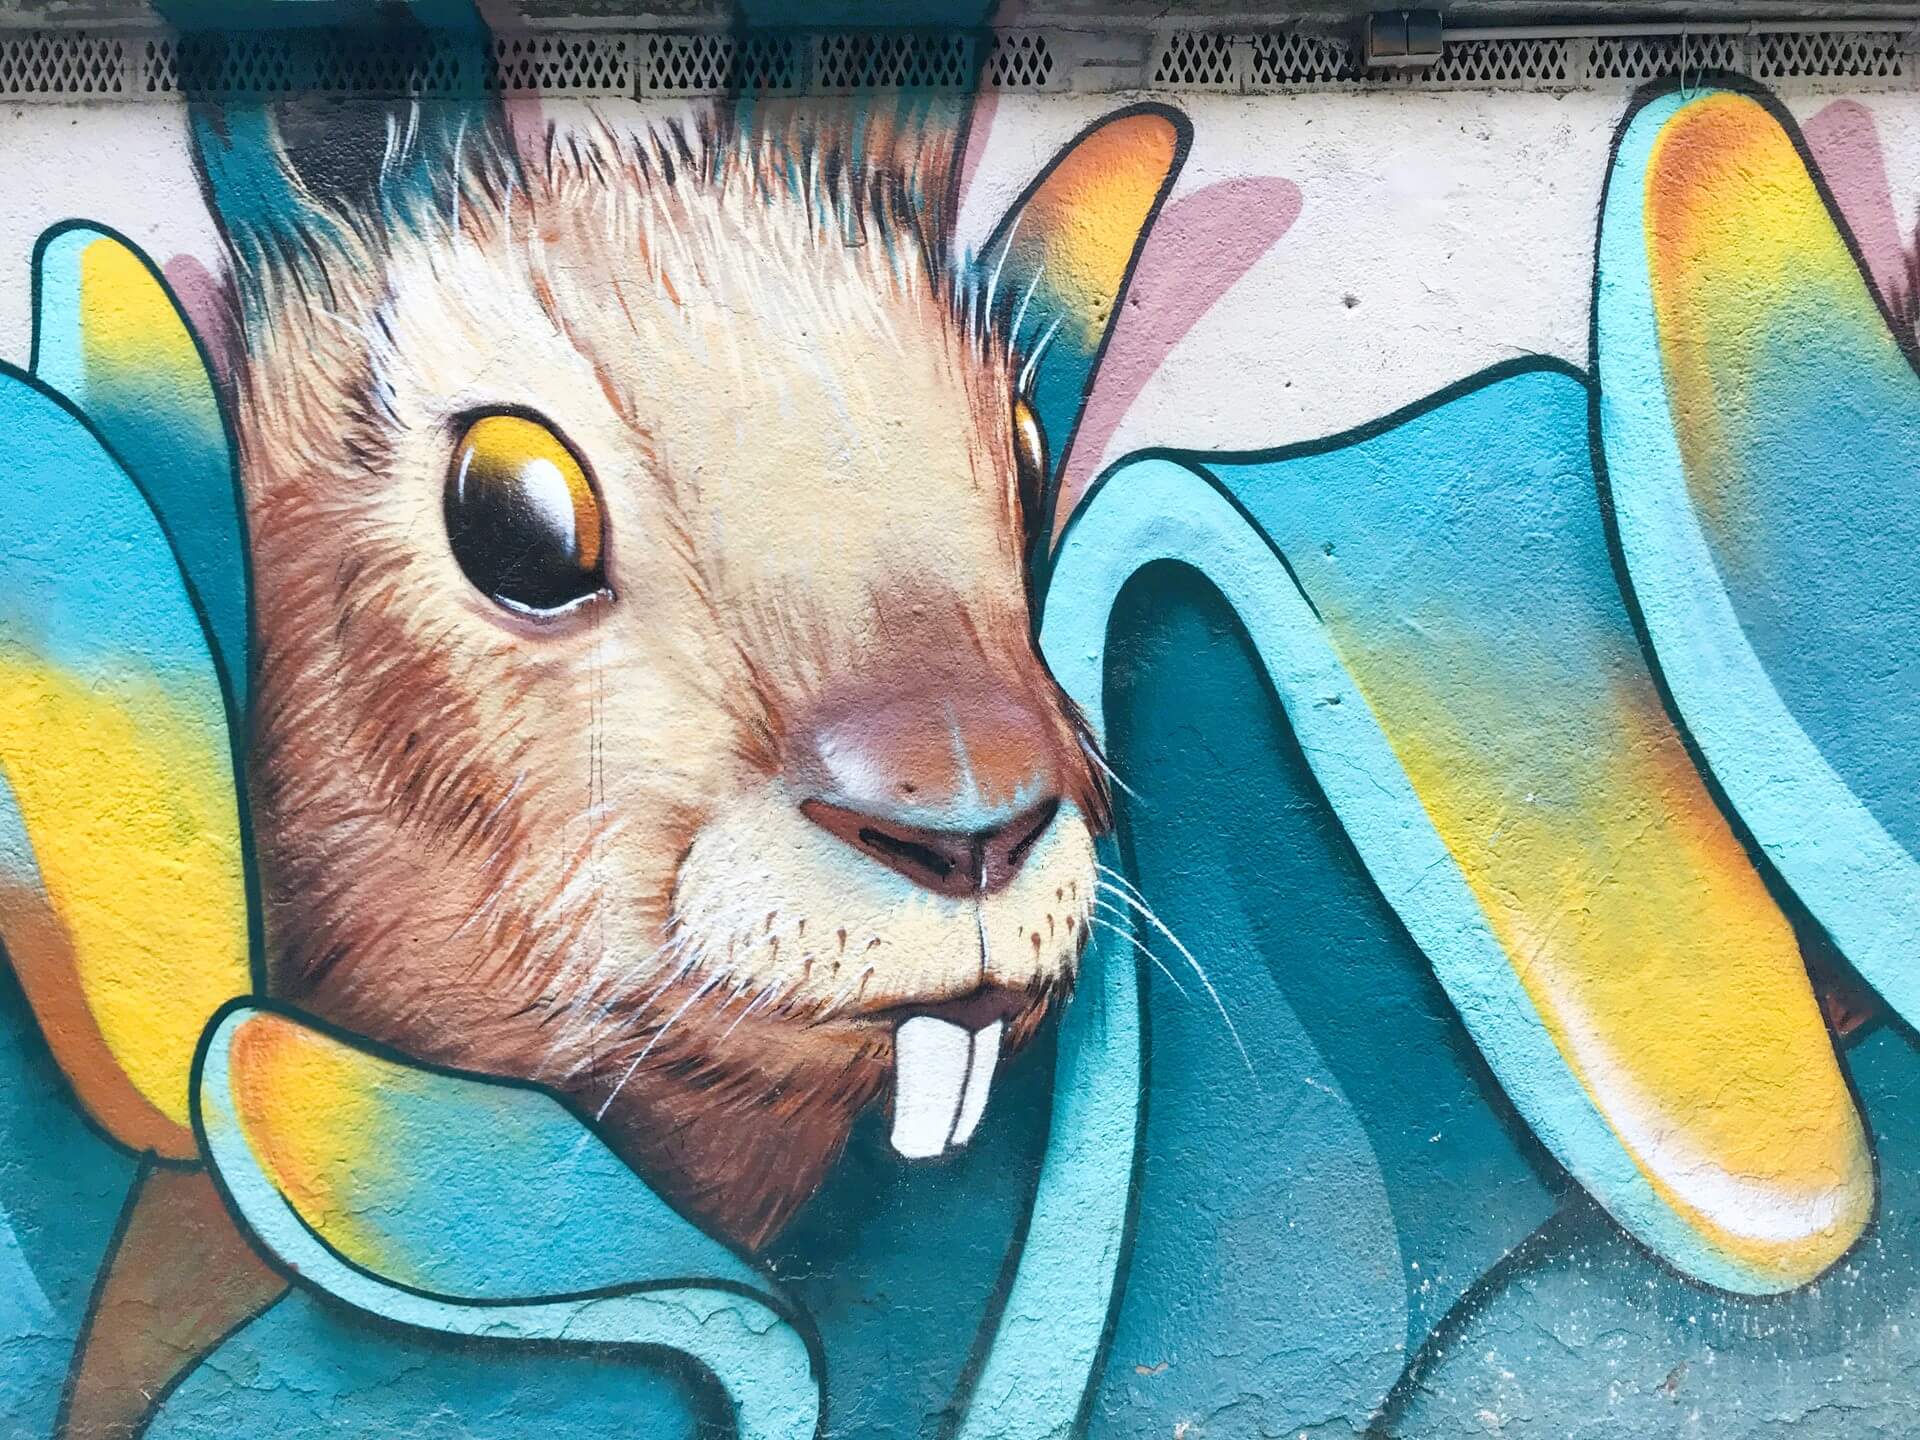 Bunny painting or graffiti